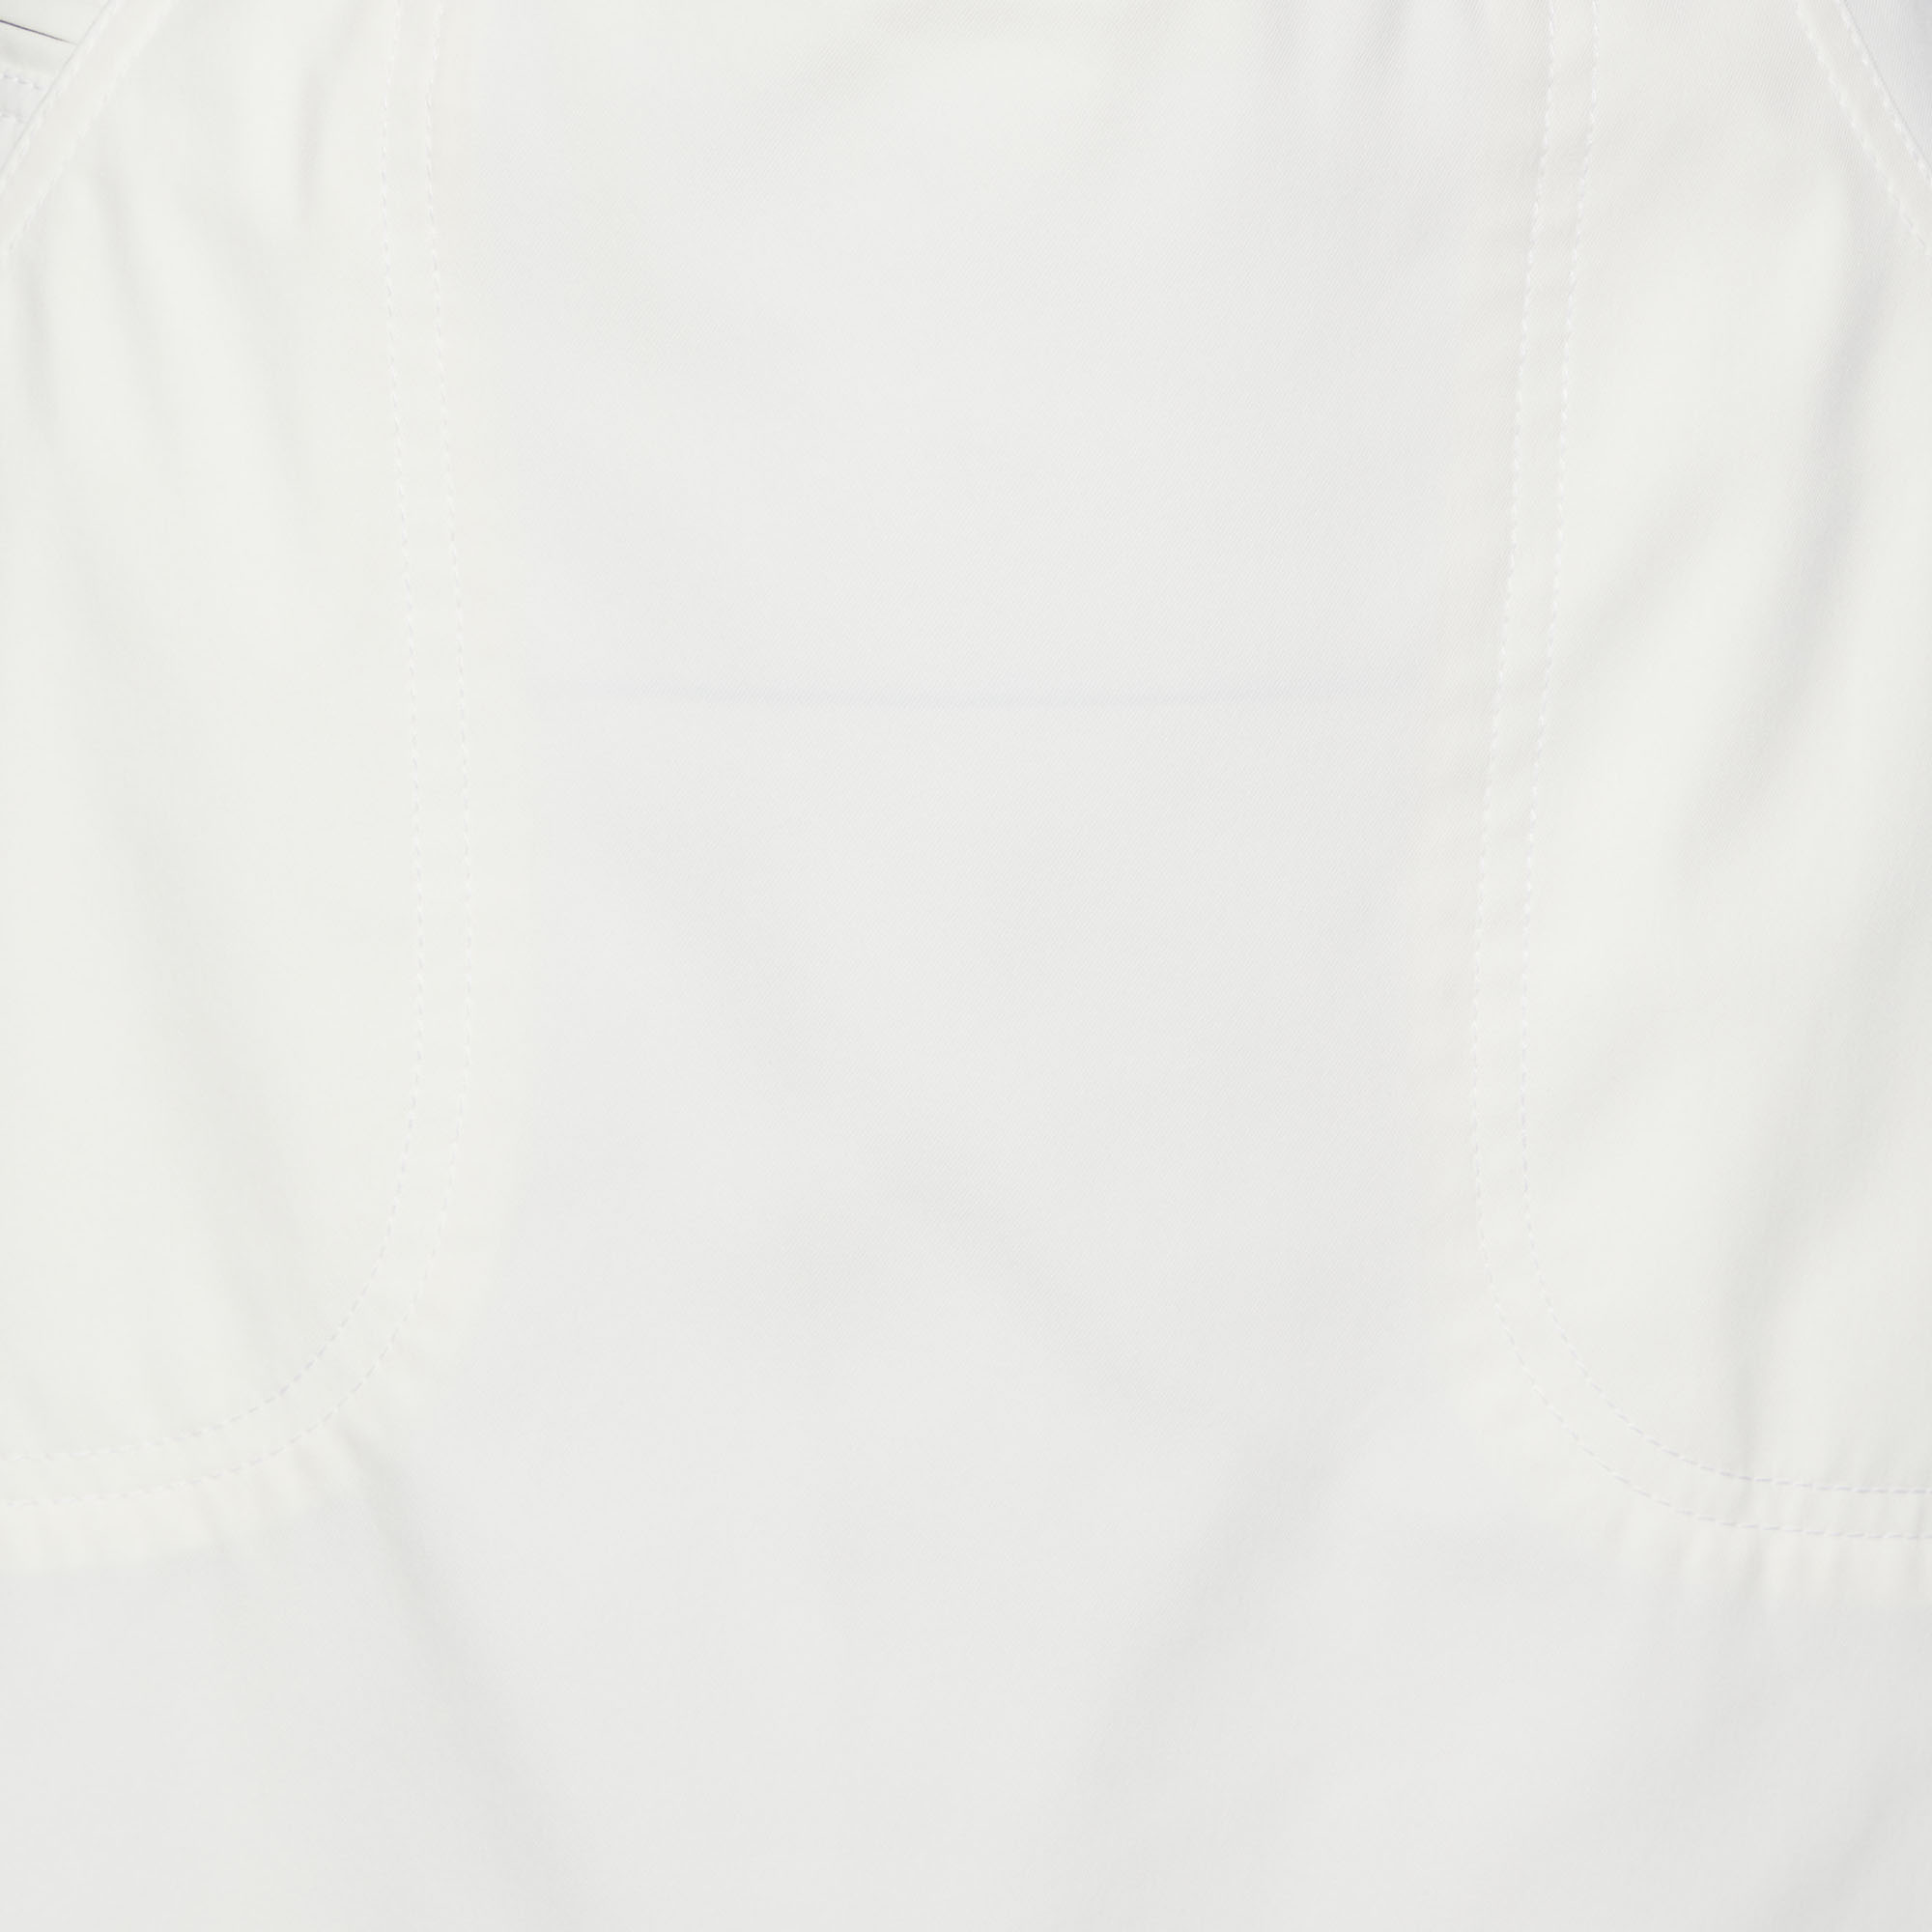 Prada Sport Off-White Nylon Pencil Skirt M